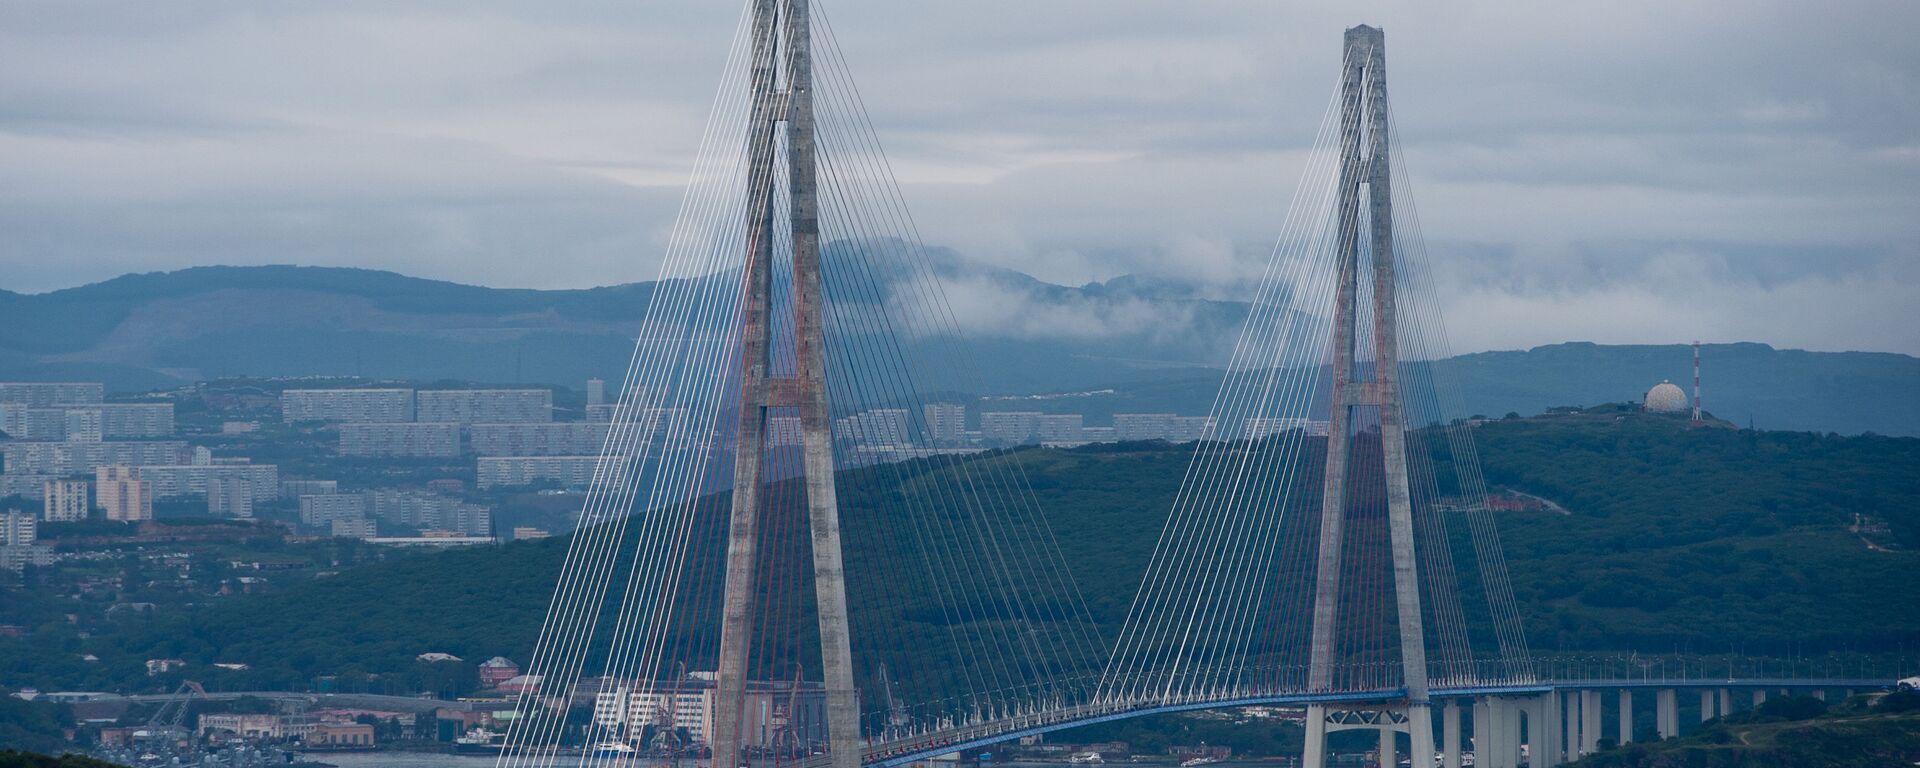 El puente de la isla Russki en la ciudad rusa de Vladivostok - Sputnik Mundo, 1920, 04.09.2019